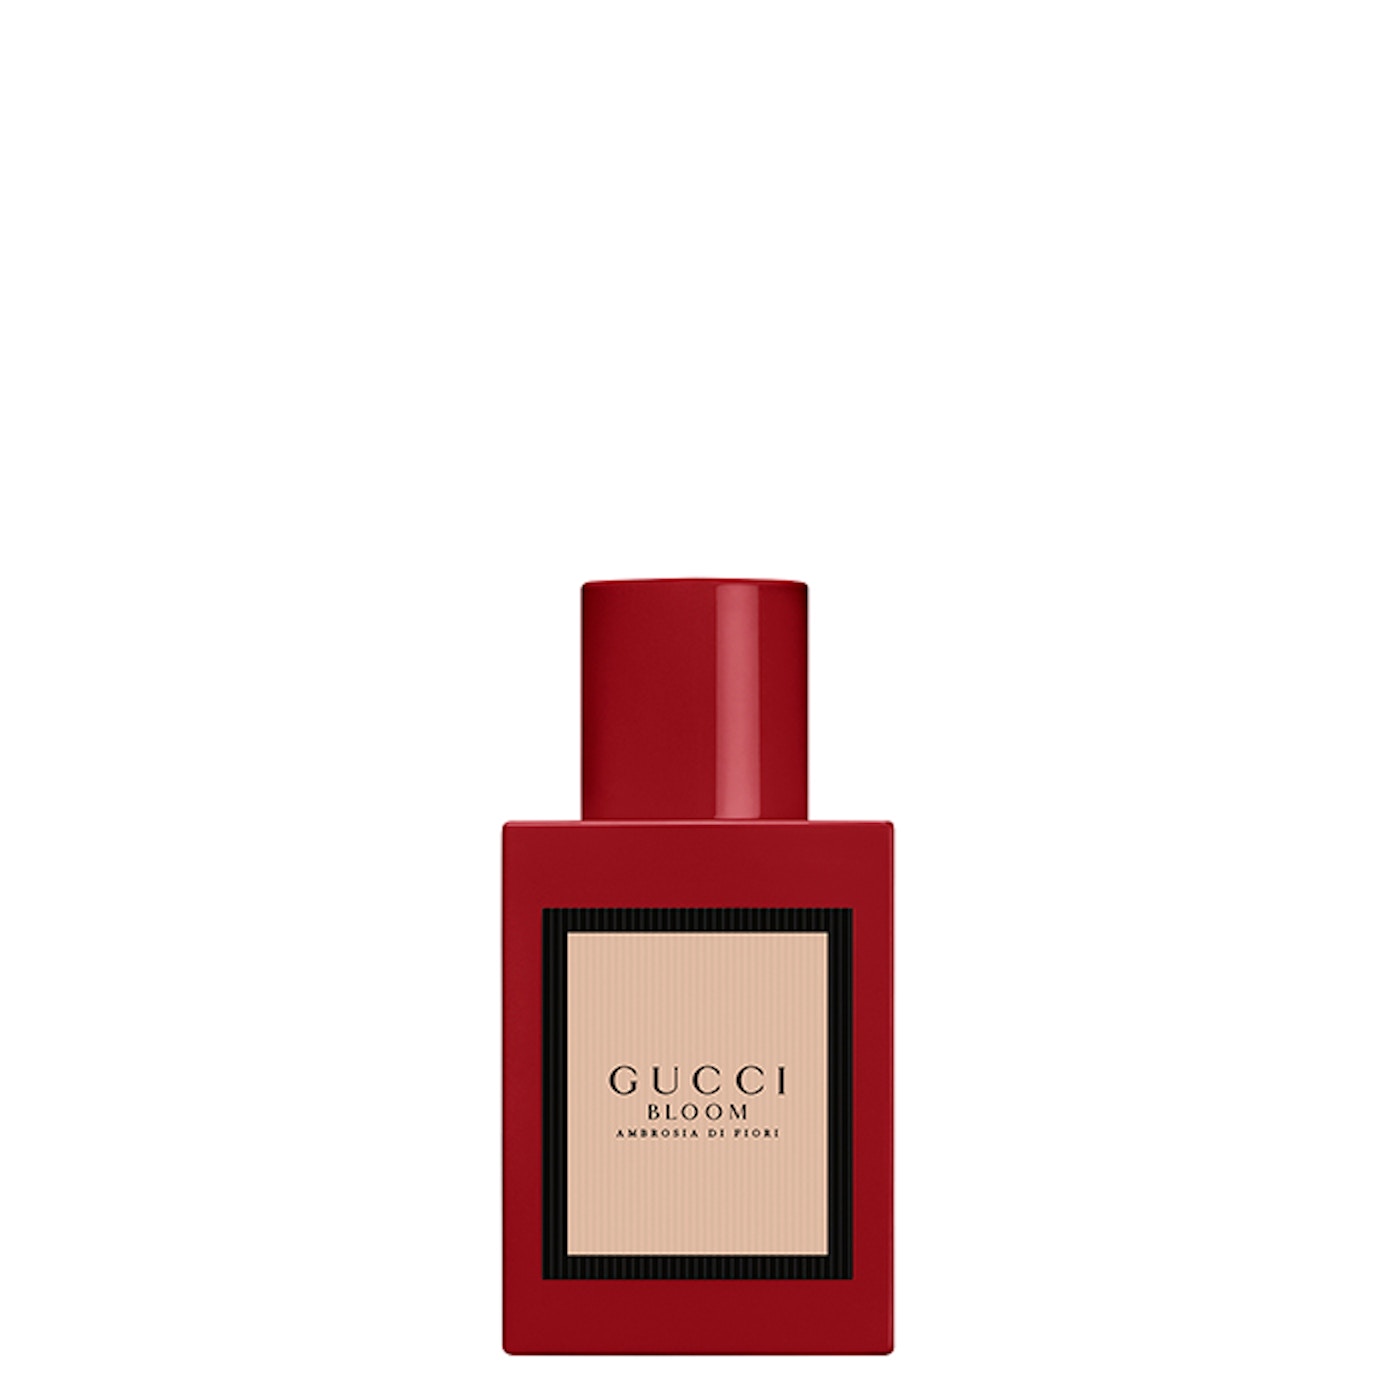 Gucci Bloom Ambrosia di Fiori Intense Eau de Parfum 30ml Spray - Peacock Bazaar